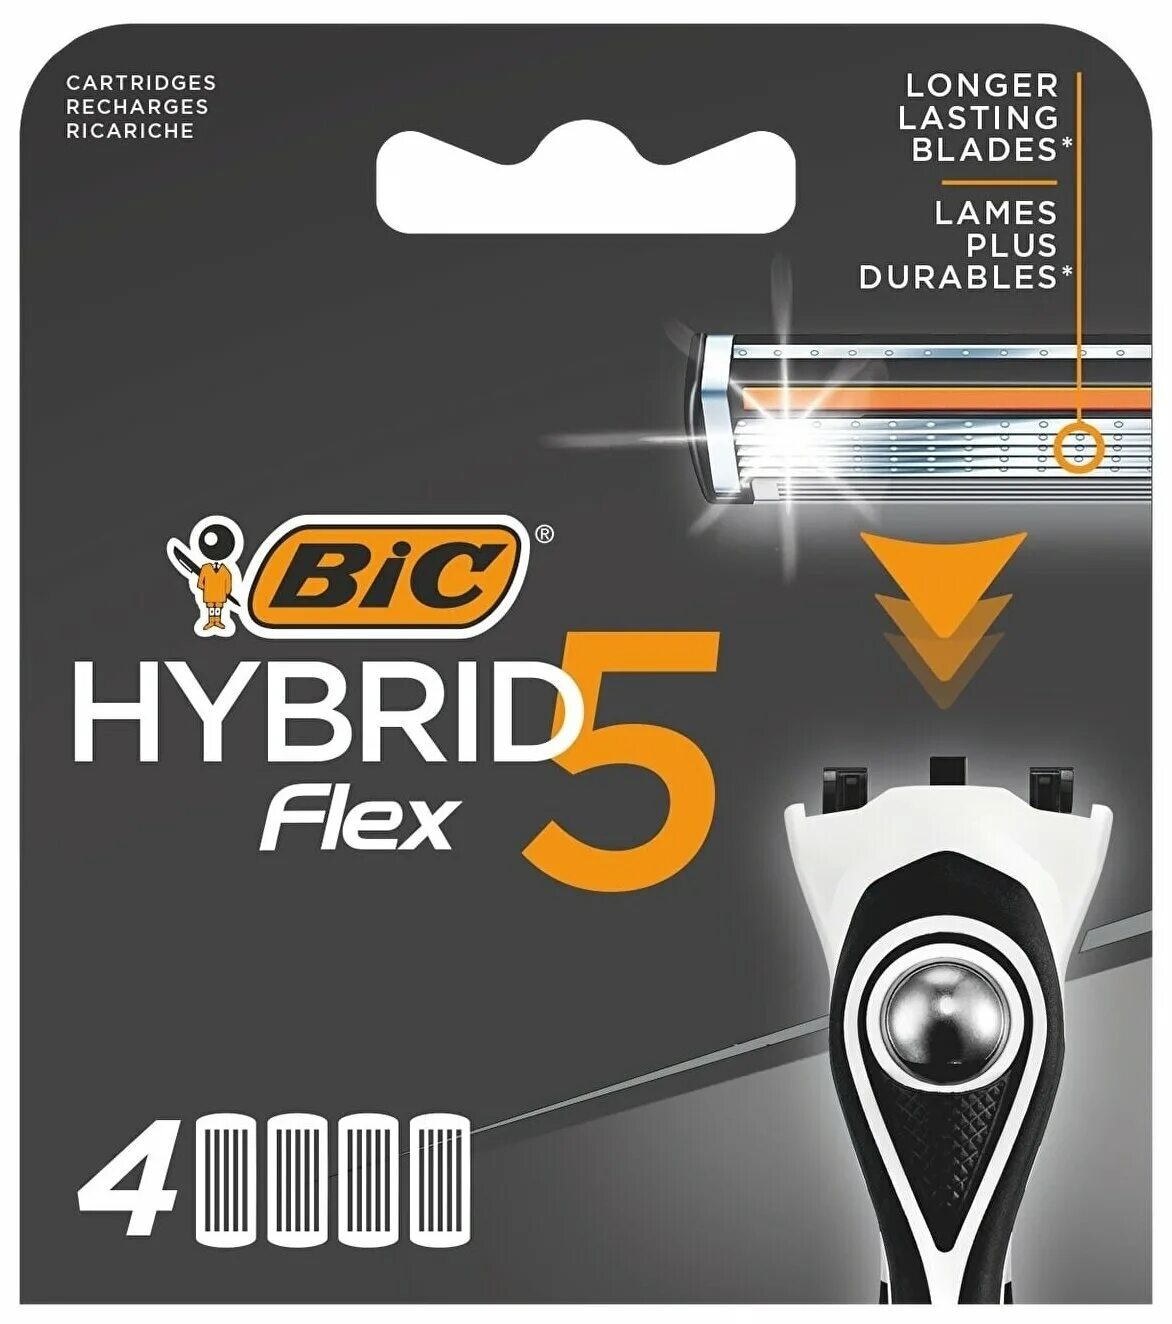 Кассеты hybrid. BIC Flex 5 Hybrid кассеты. Бритва BIC Flex 5 Hybrid. BIC Flex 3 Hybrid картриджи для бритвы. Сменные лнзвия для бритвы Биг Флекс.